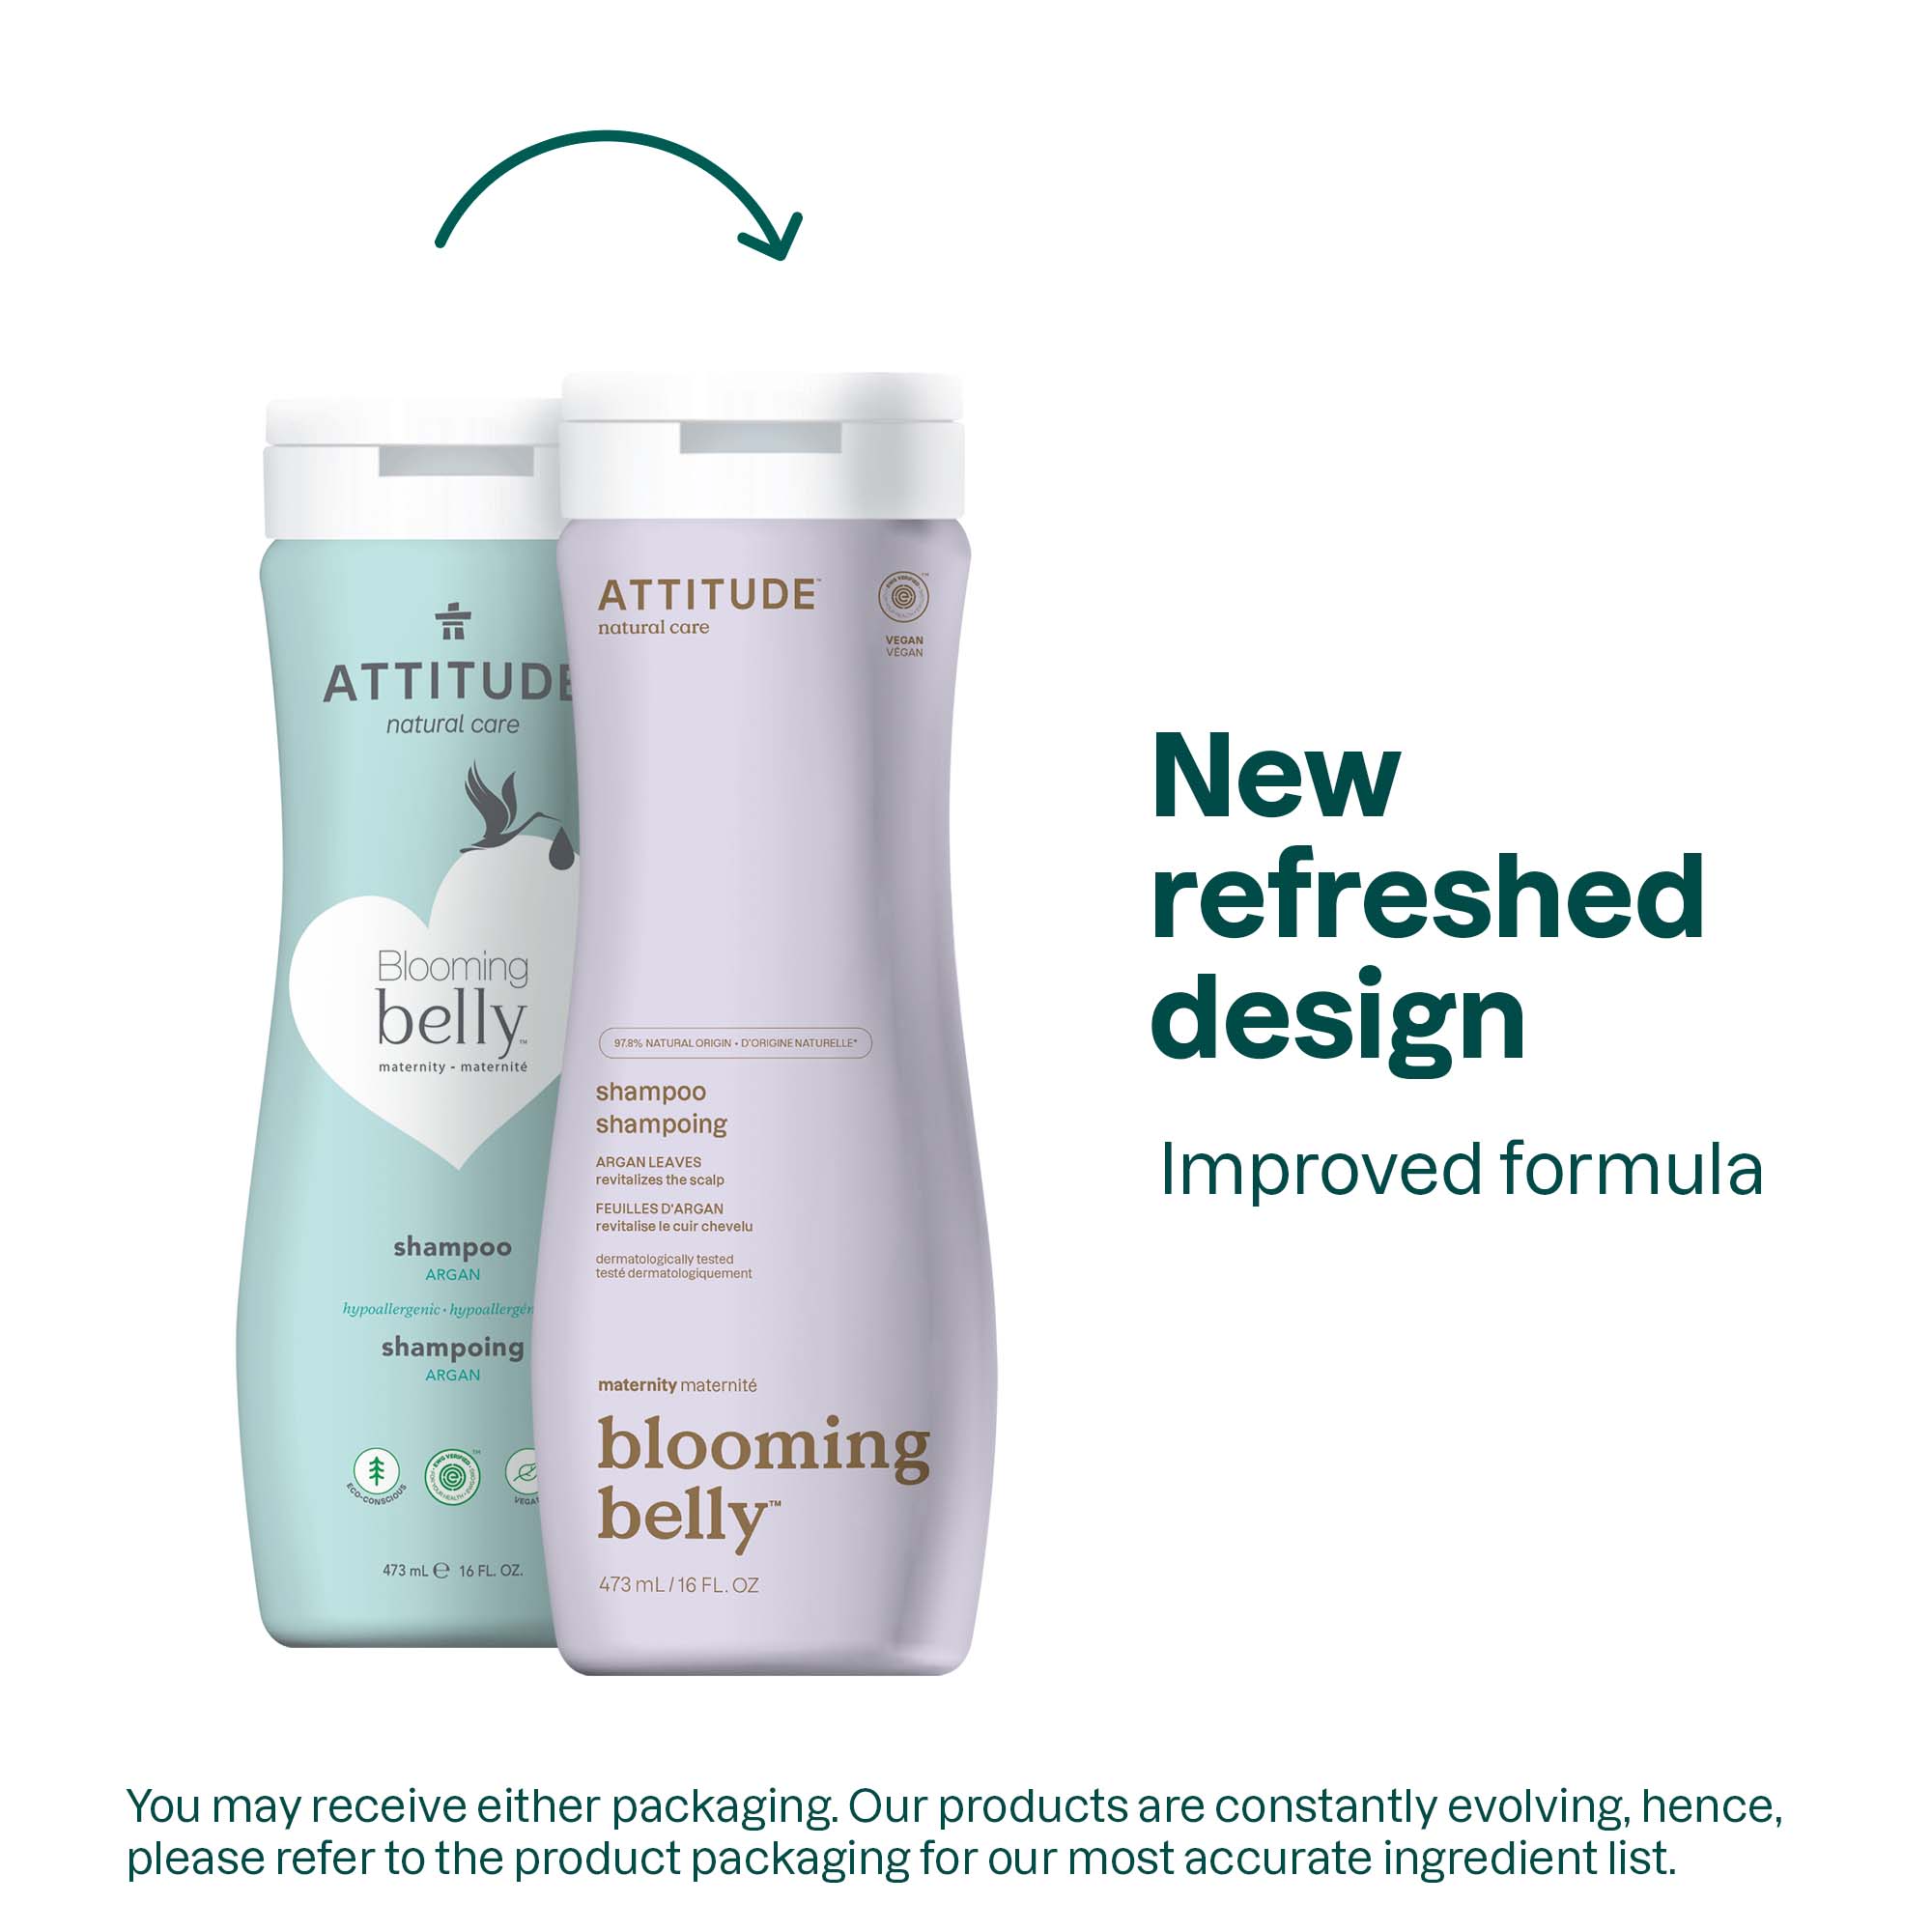 ATTITUDE Blooming belly™ Shampoo 11011_en? 473 mL